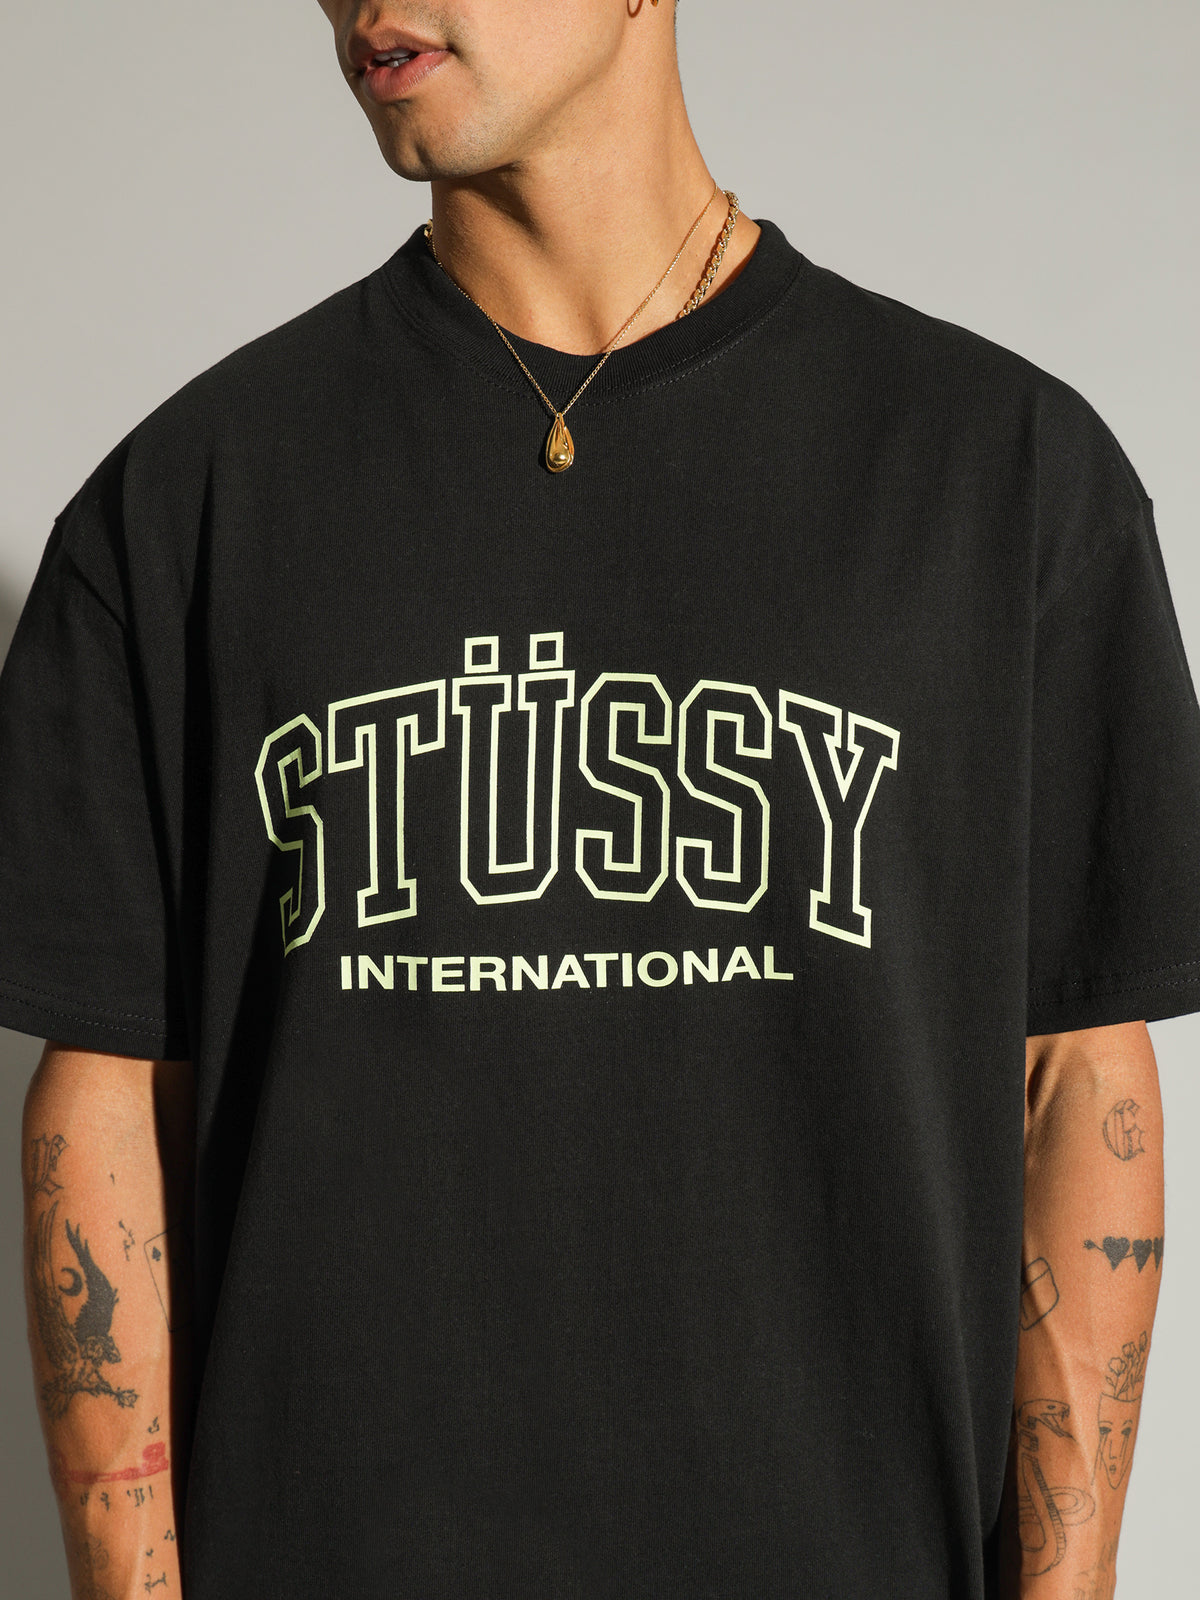 College International Heavyweight T-Shirt in Solid Black